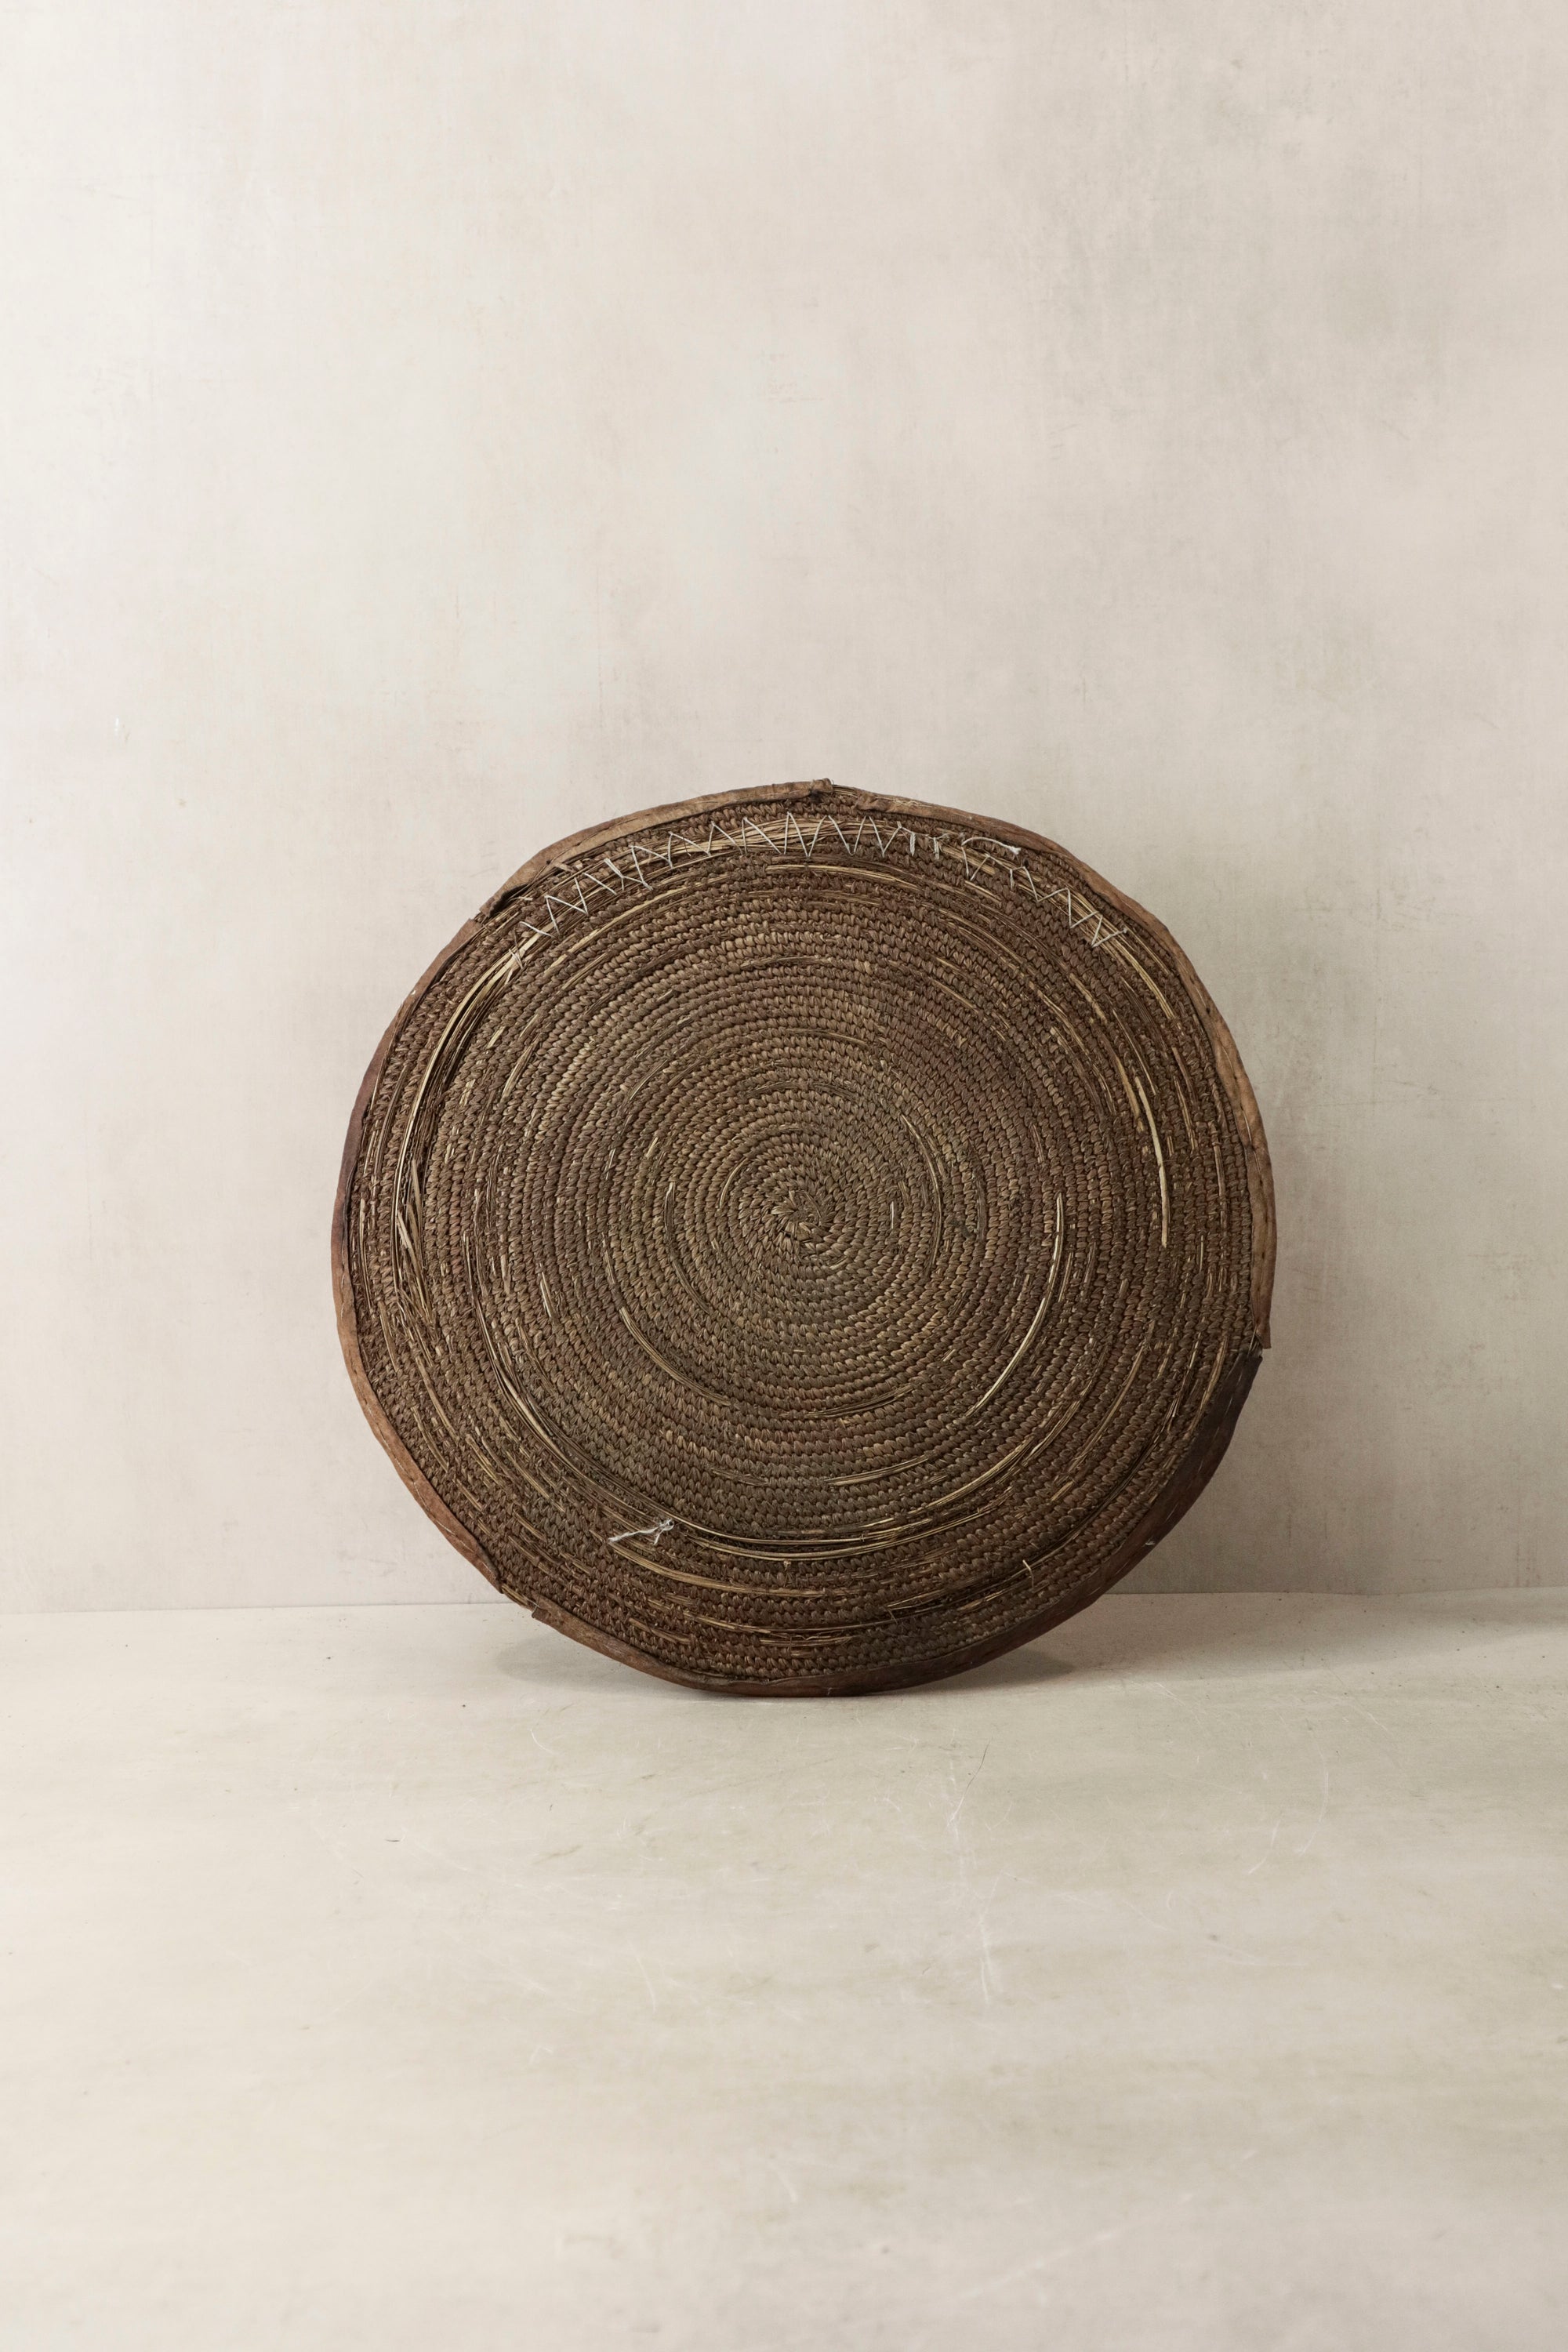 Handwoven Wall Basket - Chad - 41.8